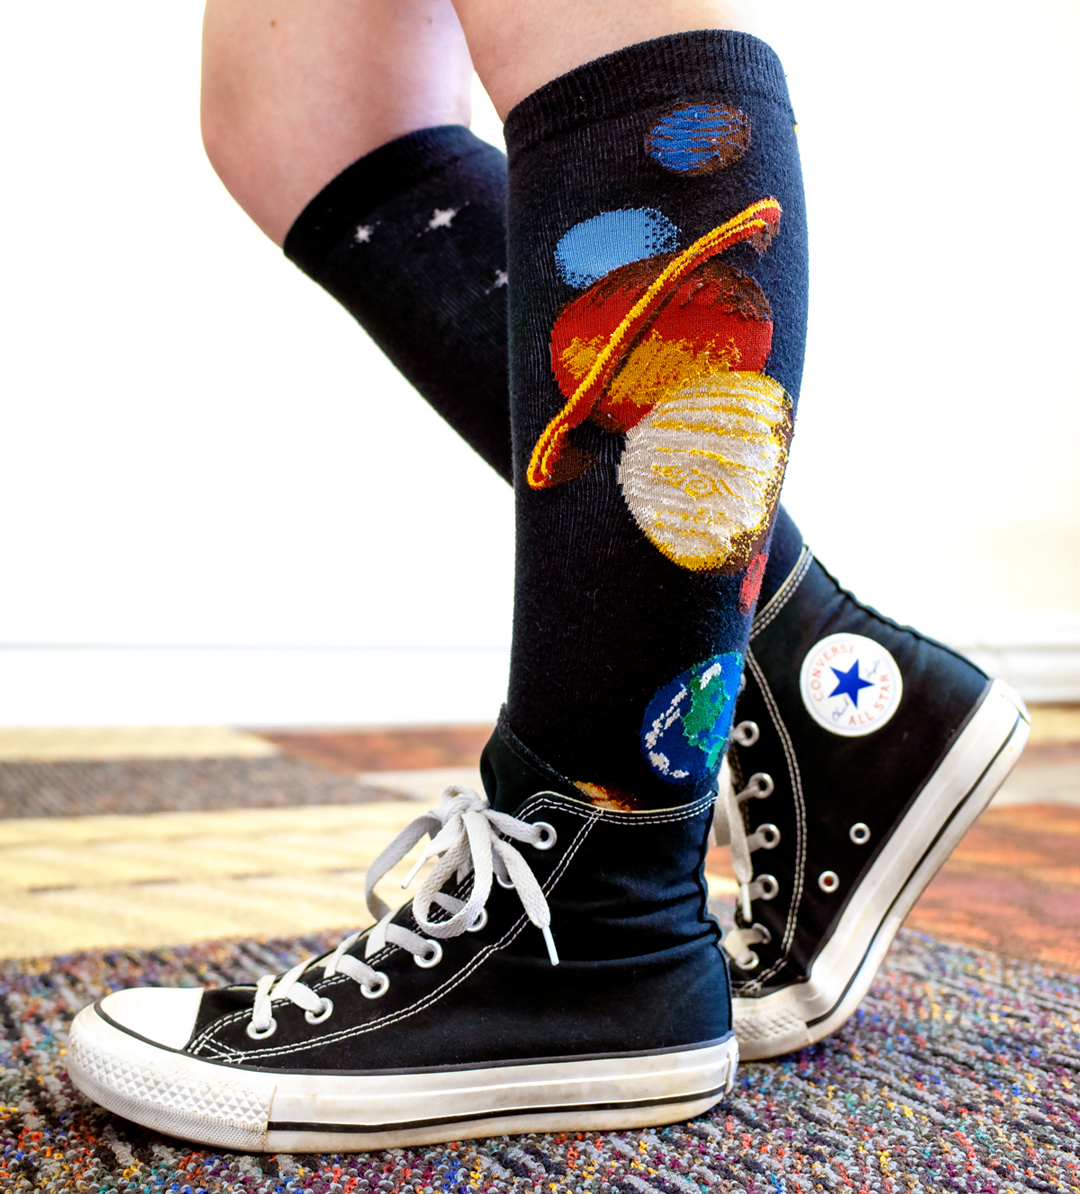 converse style socks